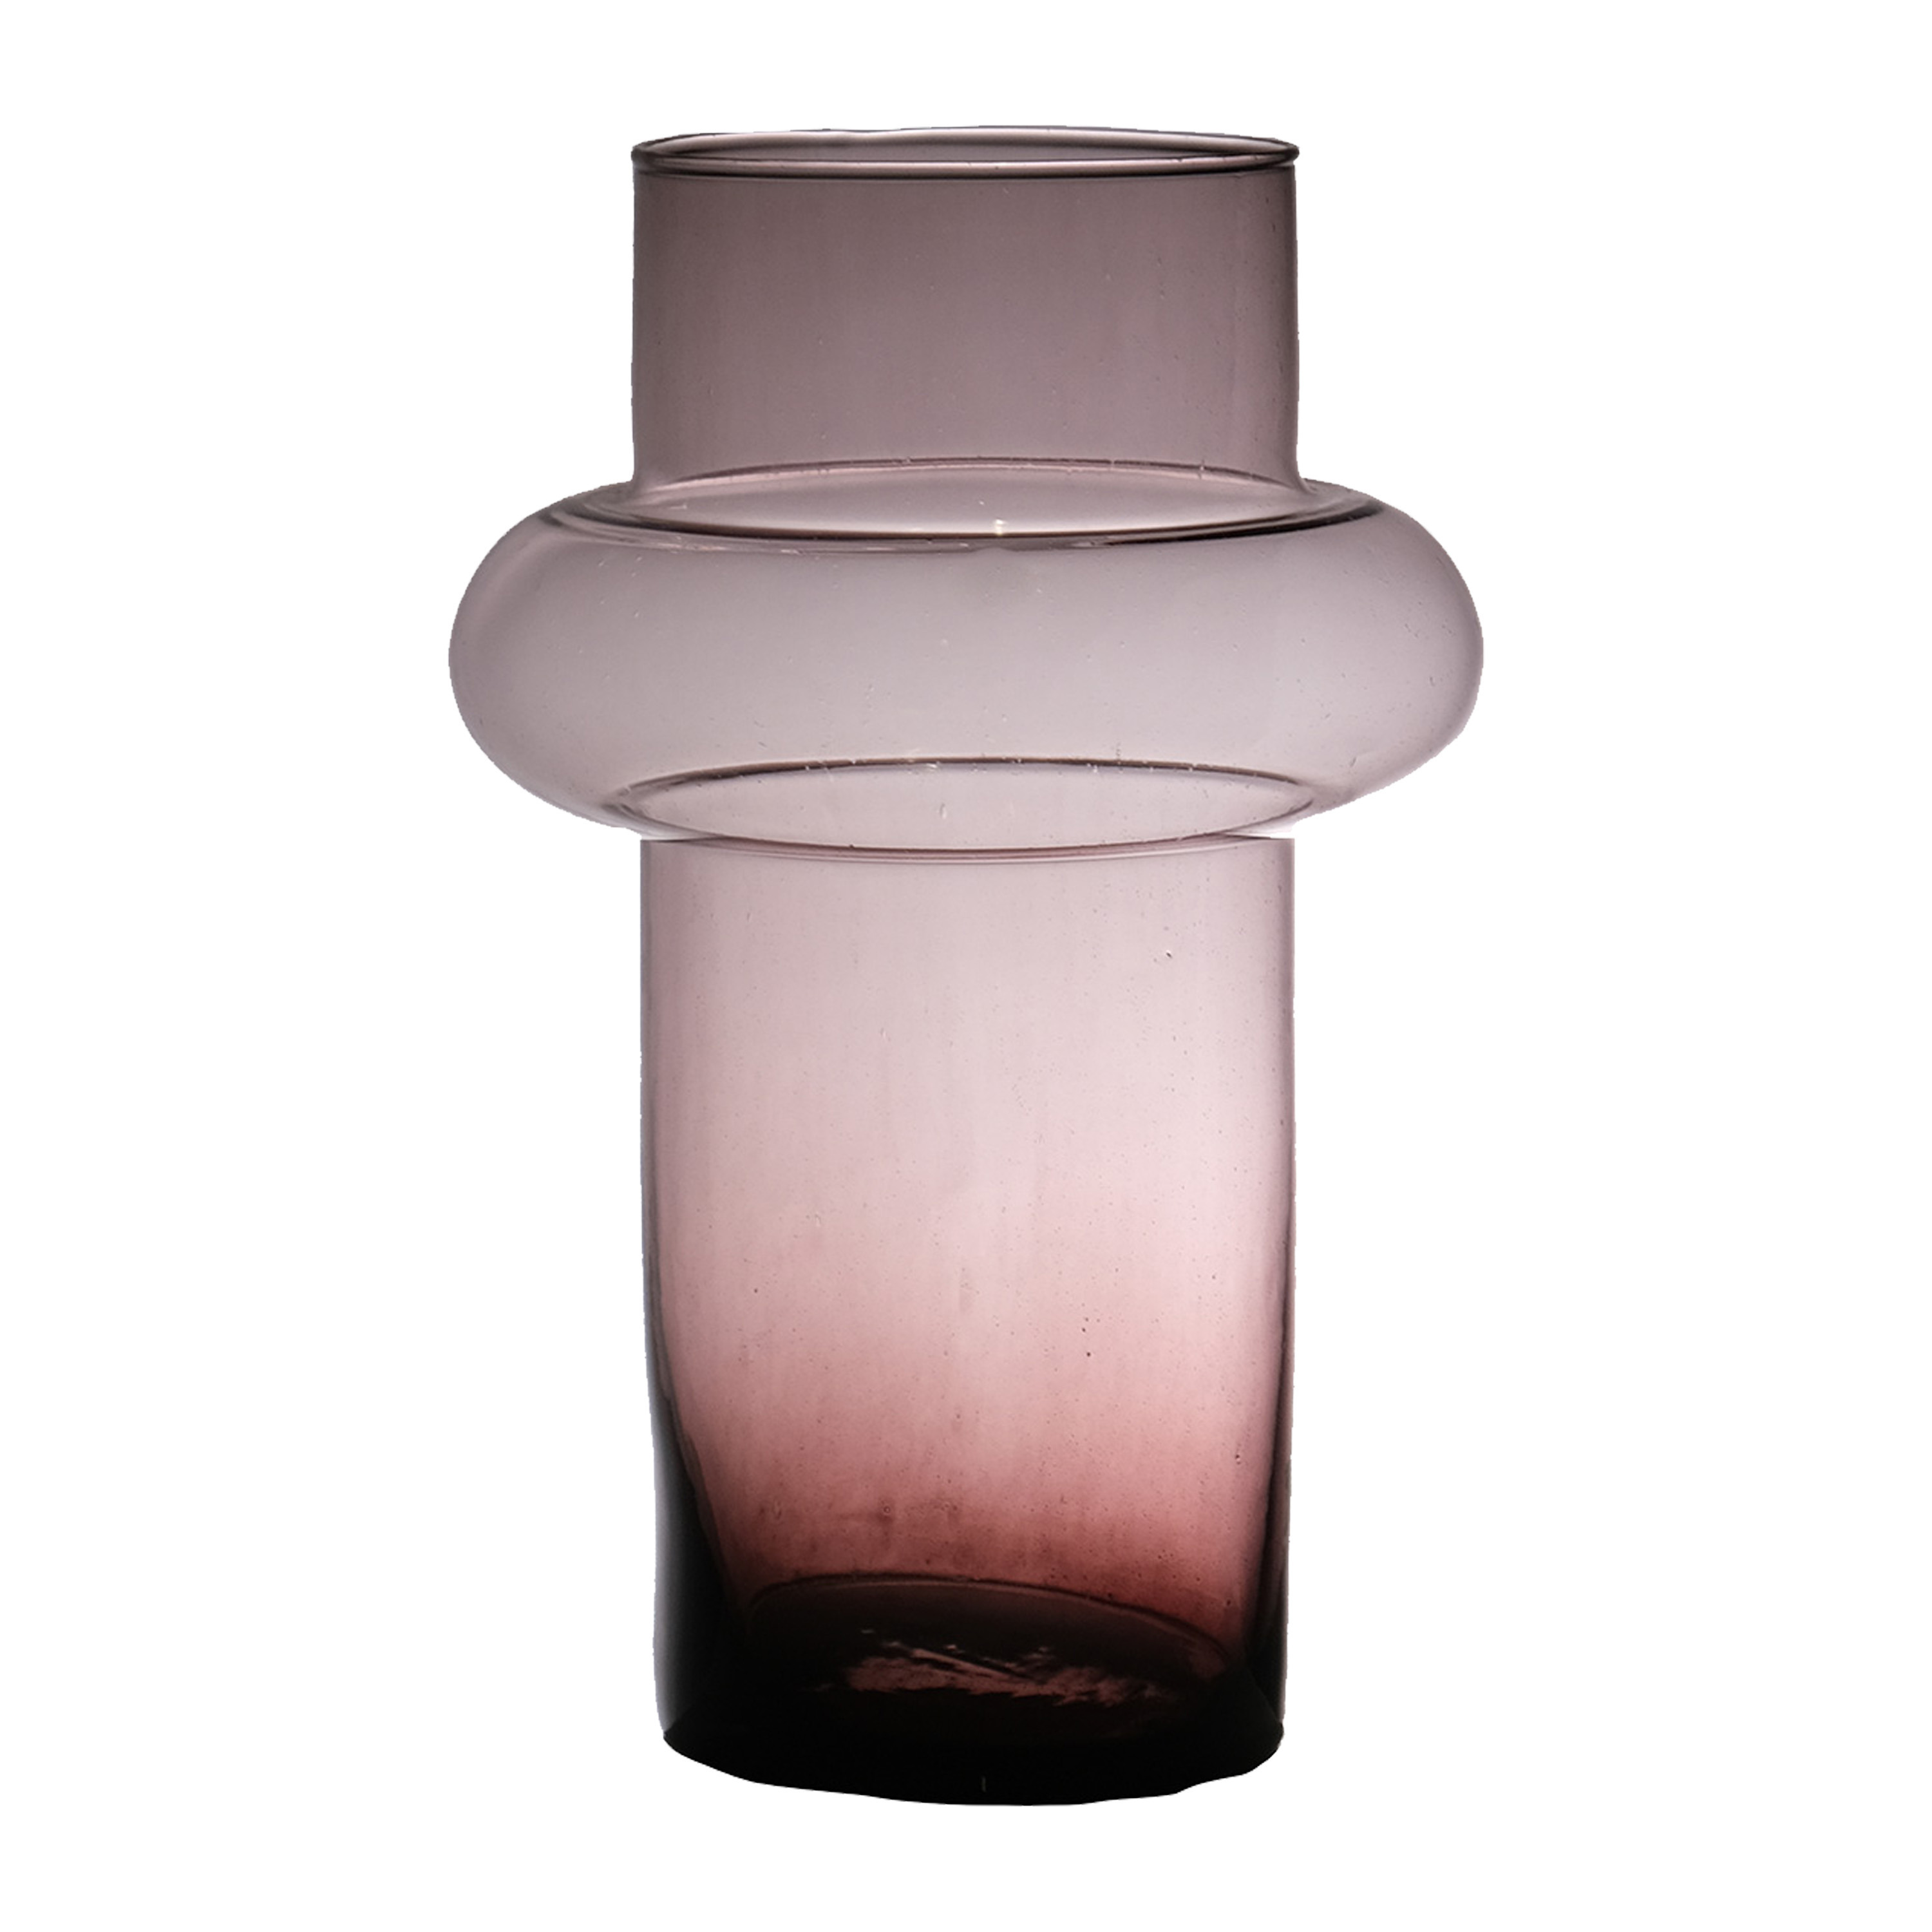 Hakbijl Glass Bloemenvaas Luna transparant mauve eco glas D19 x H30 cm cilinder vaas